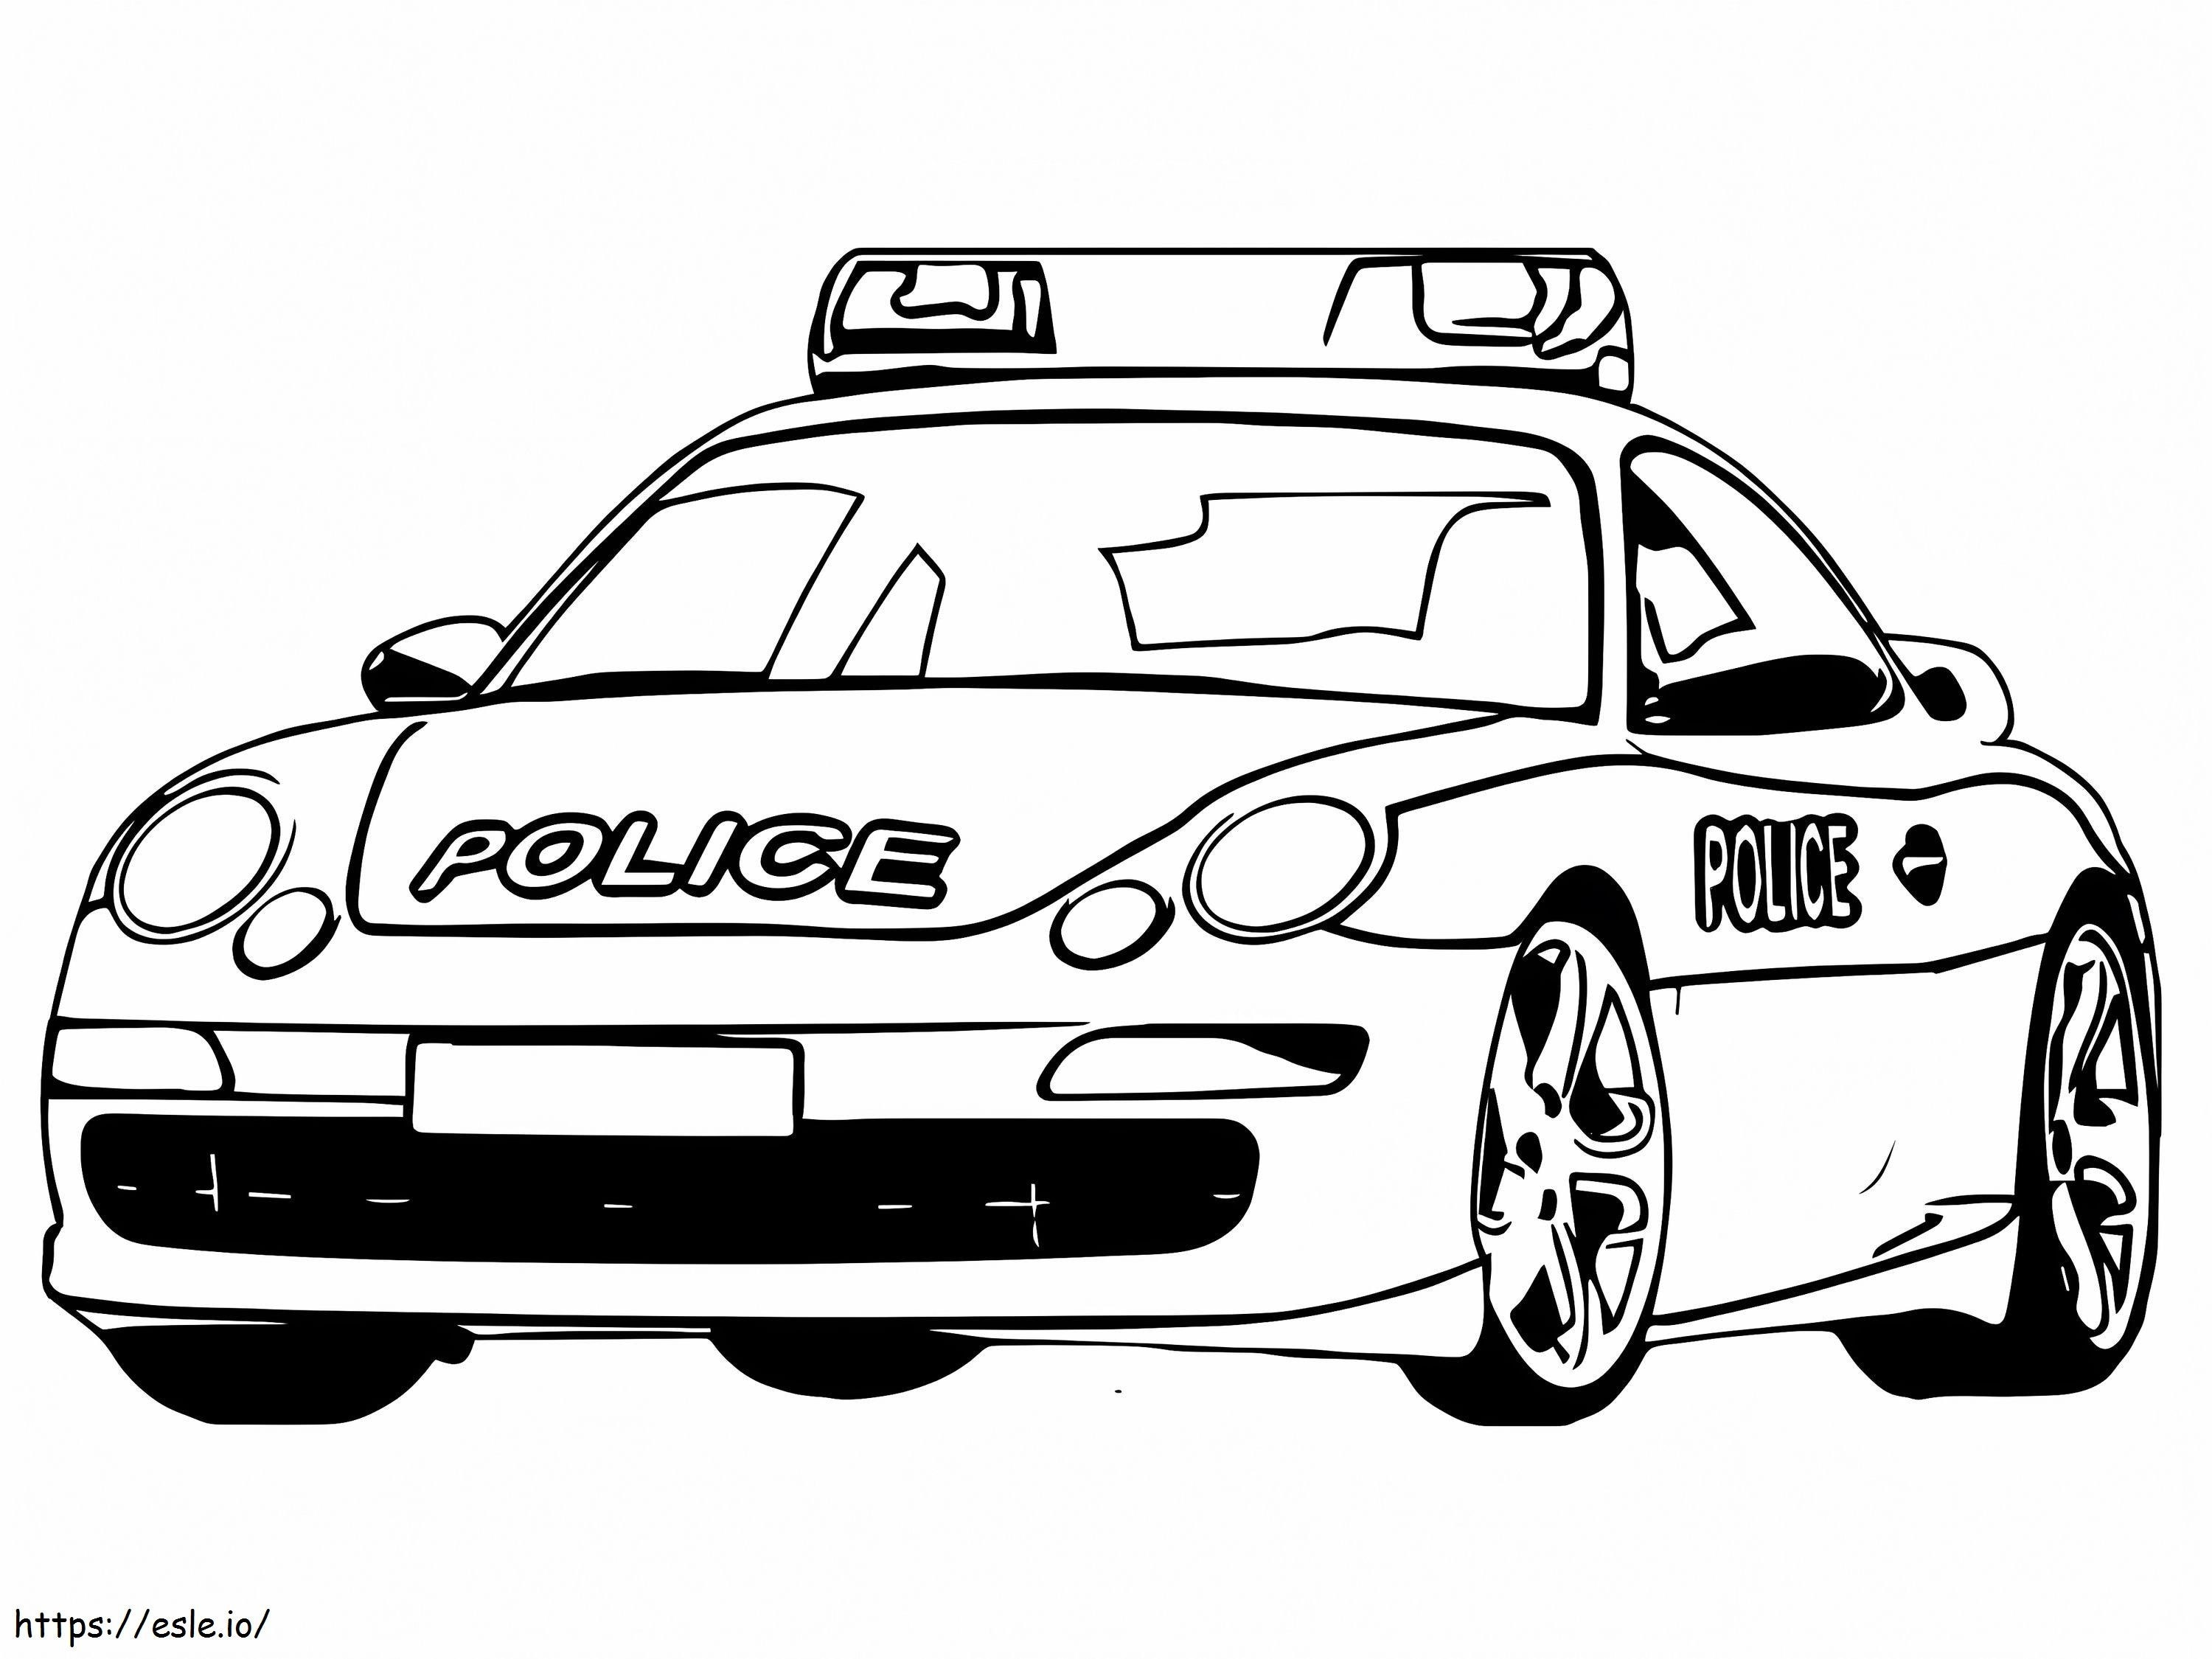 Porsche Police Car coloring page